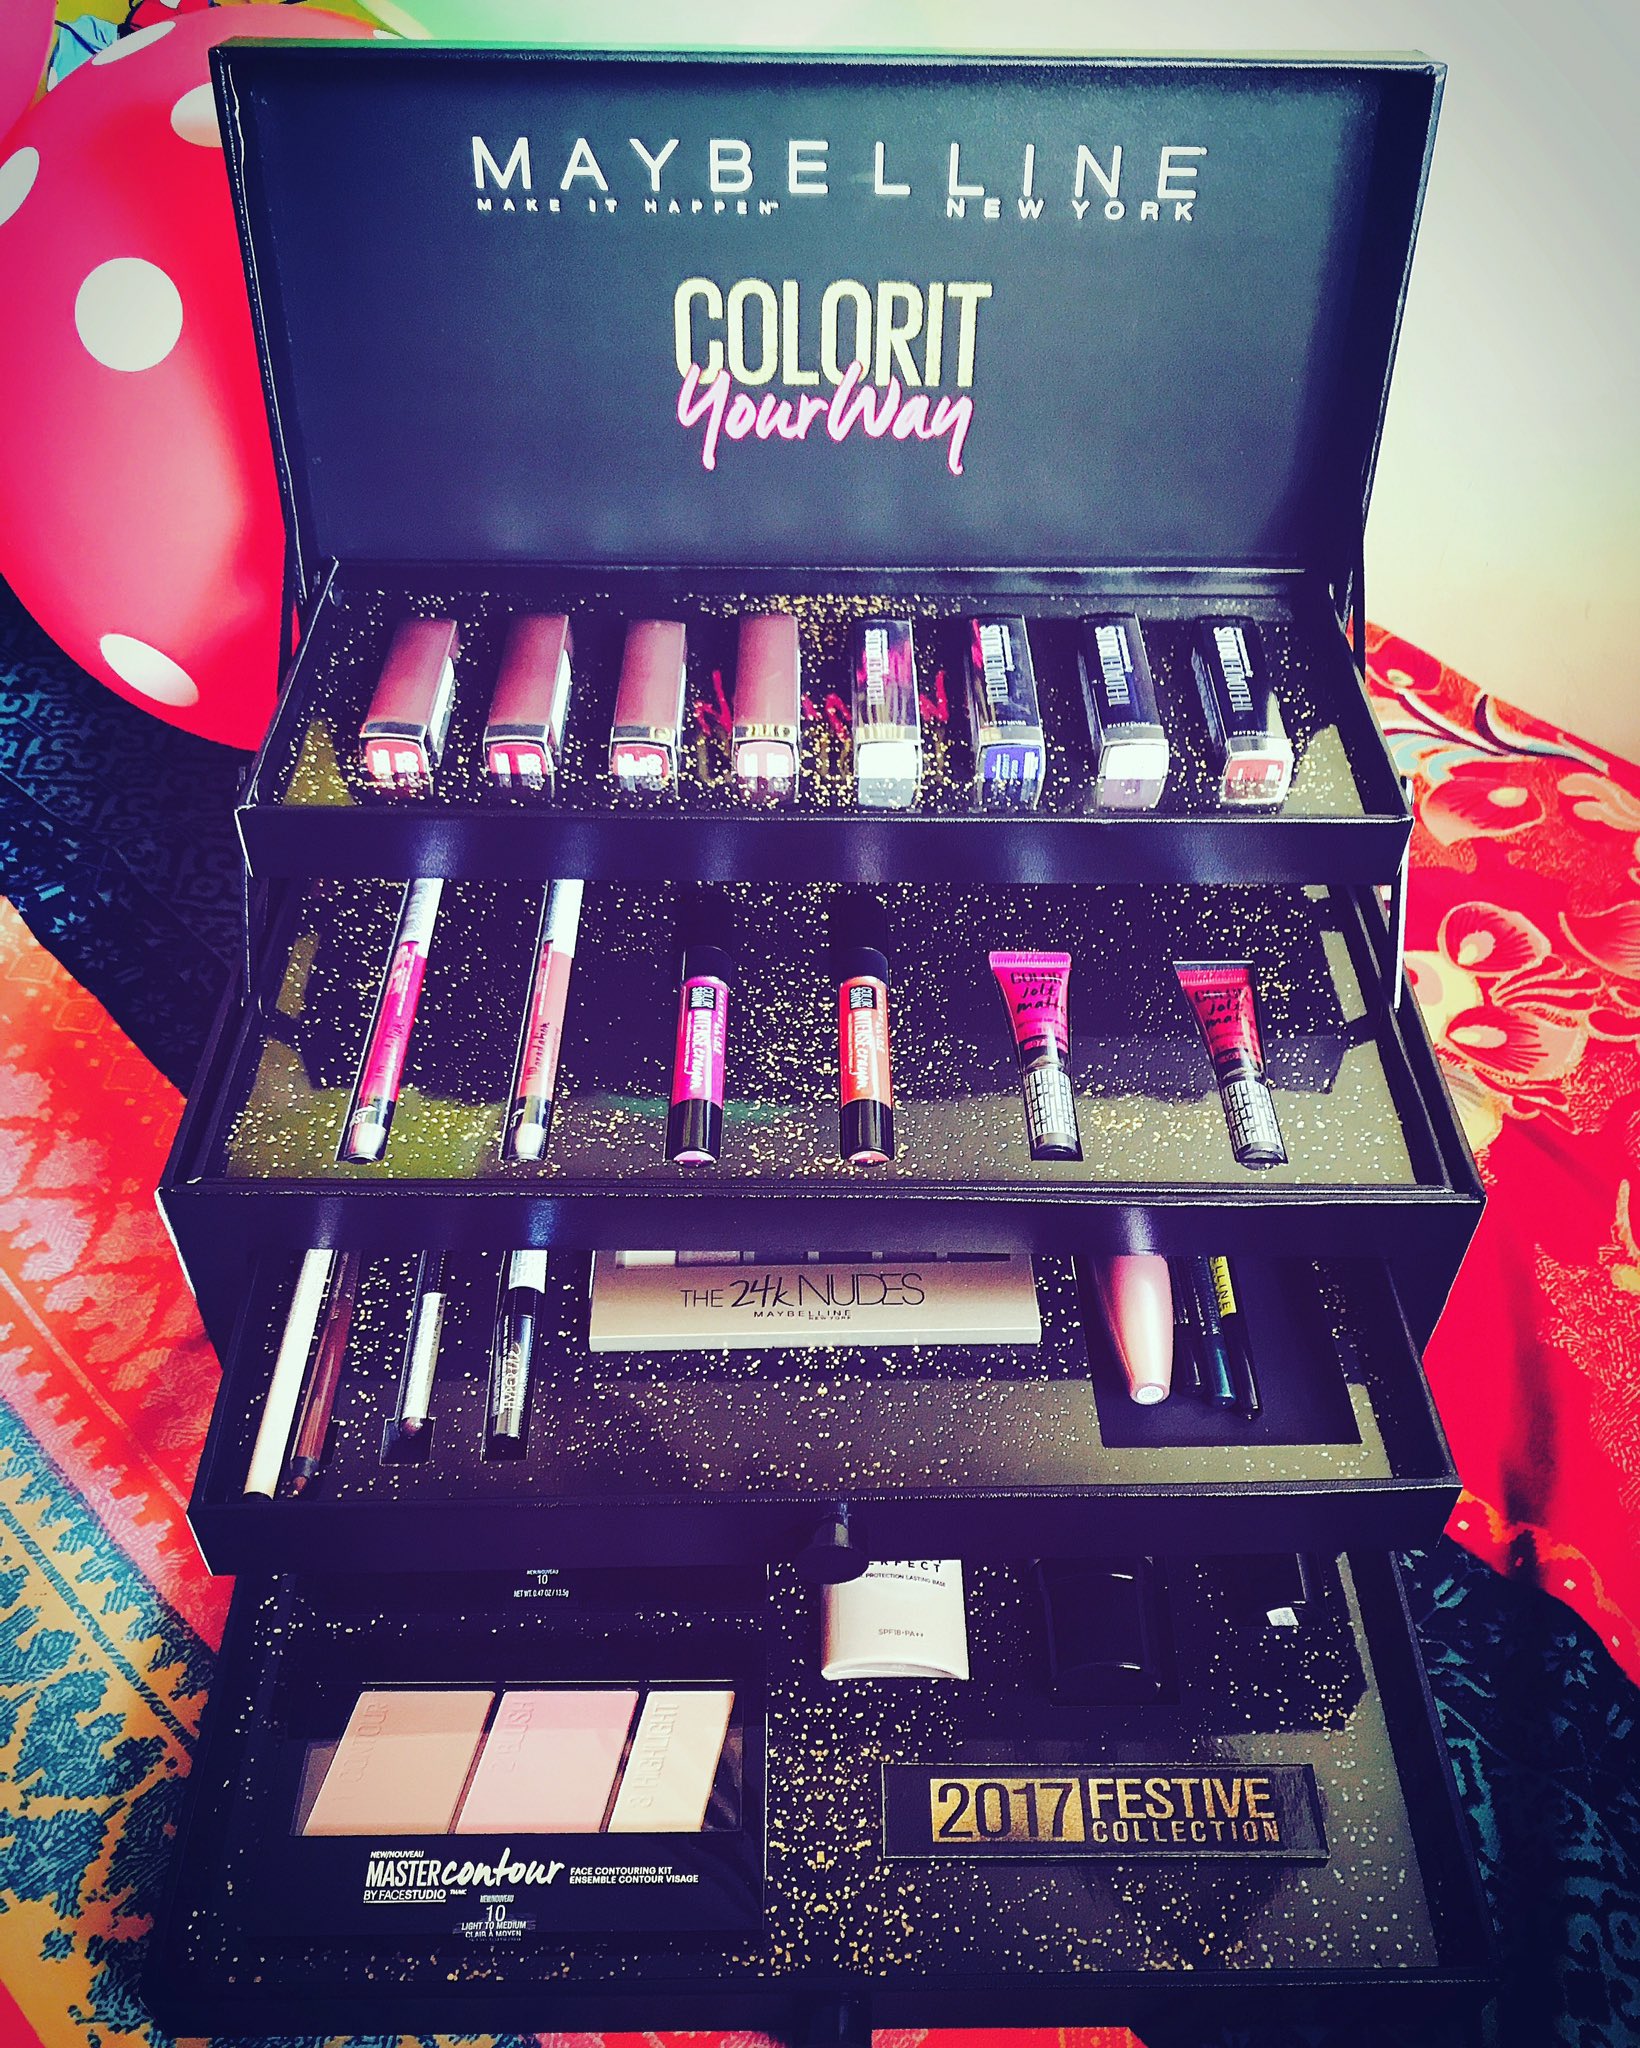 forfatter Bliv klar indtryk Roshni on Twitter: "Thankyu maybelline for the beautiful makeup kit...  😘😍... #makeup #colorItYourWay @Maybelline #makeupkit #maybelline  https://t.co/QF7B2QJq6k" / X